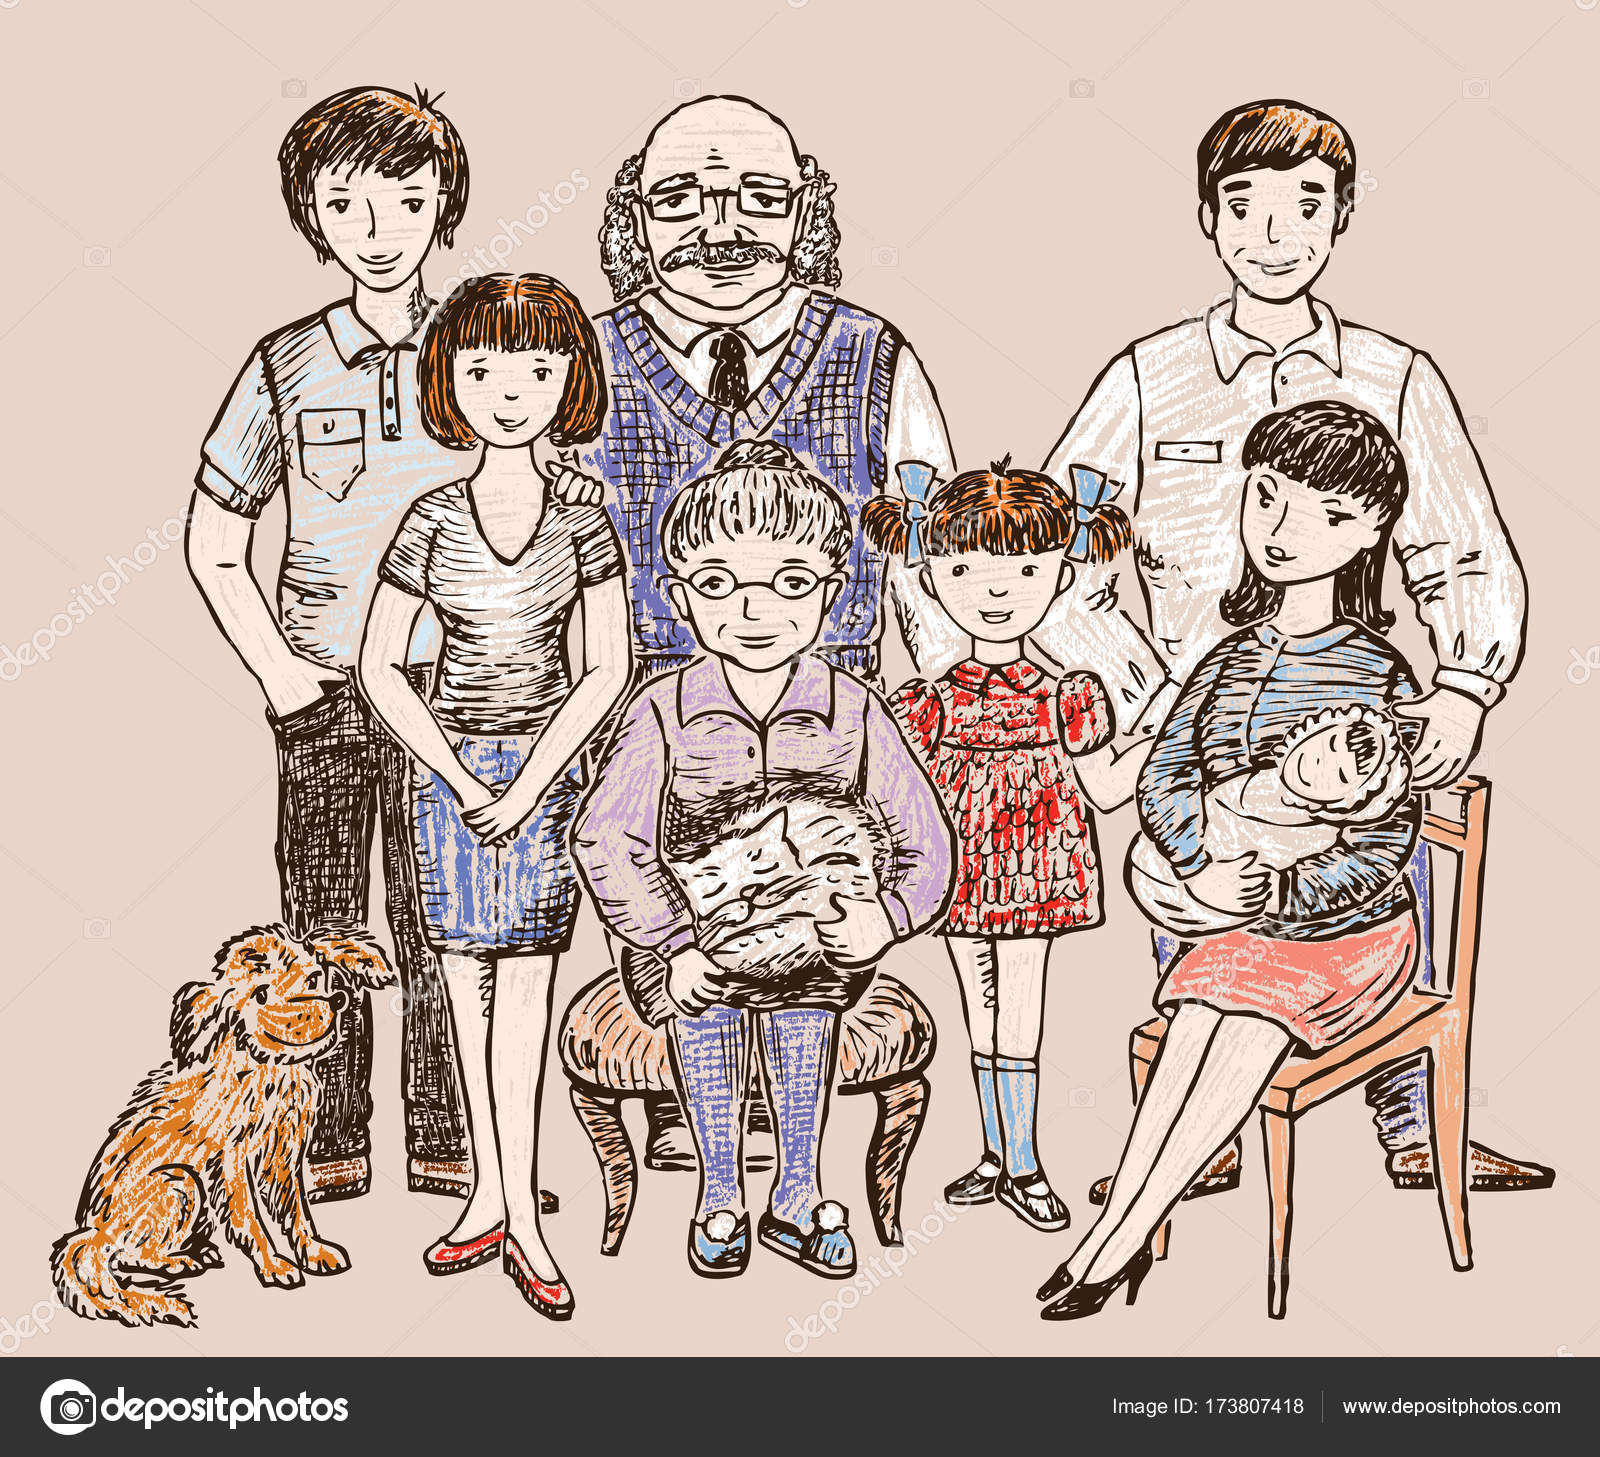 YuKhaos - Family Portrait